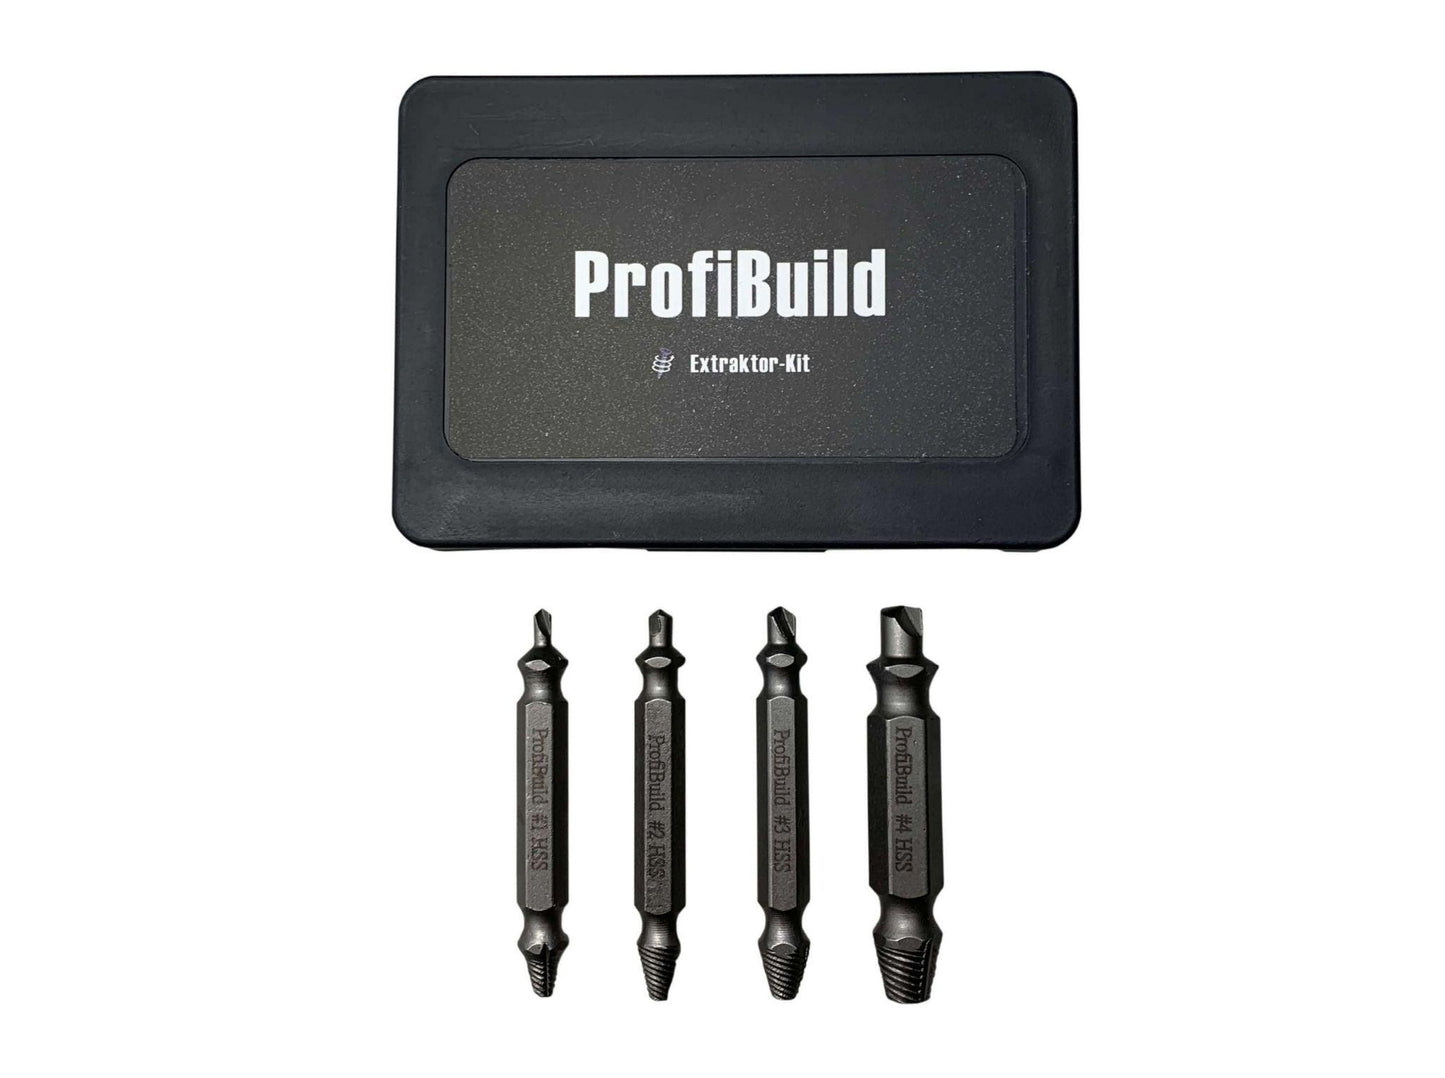 ProfiBuild Extraktor-Kit